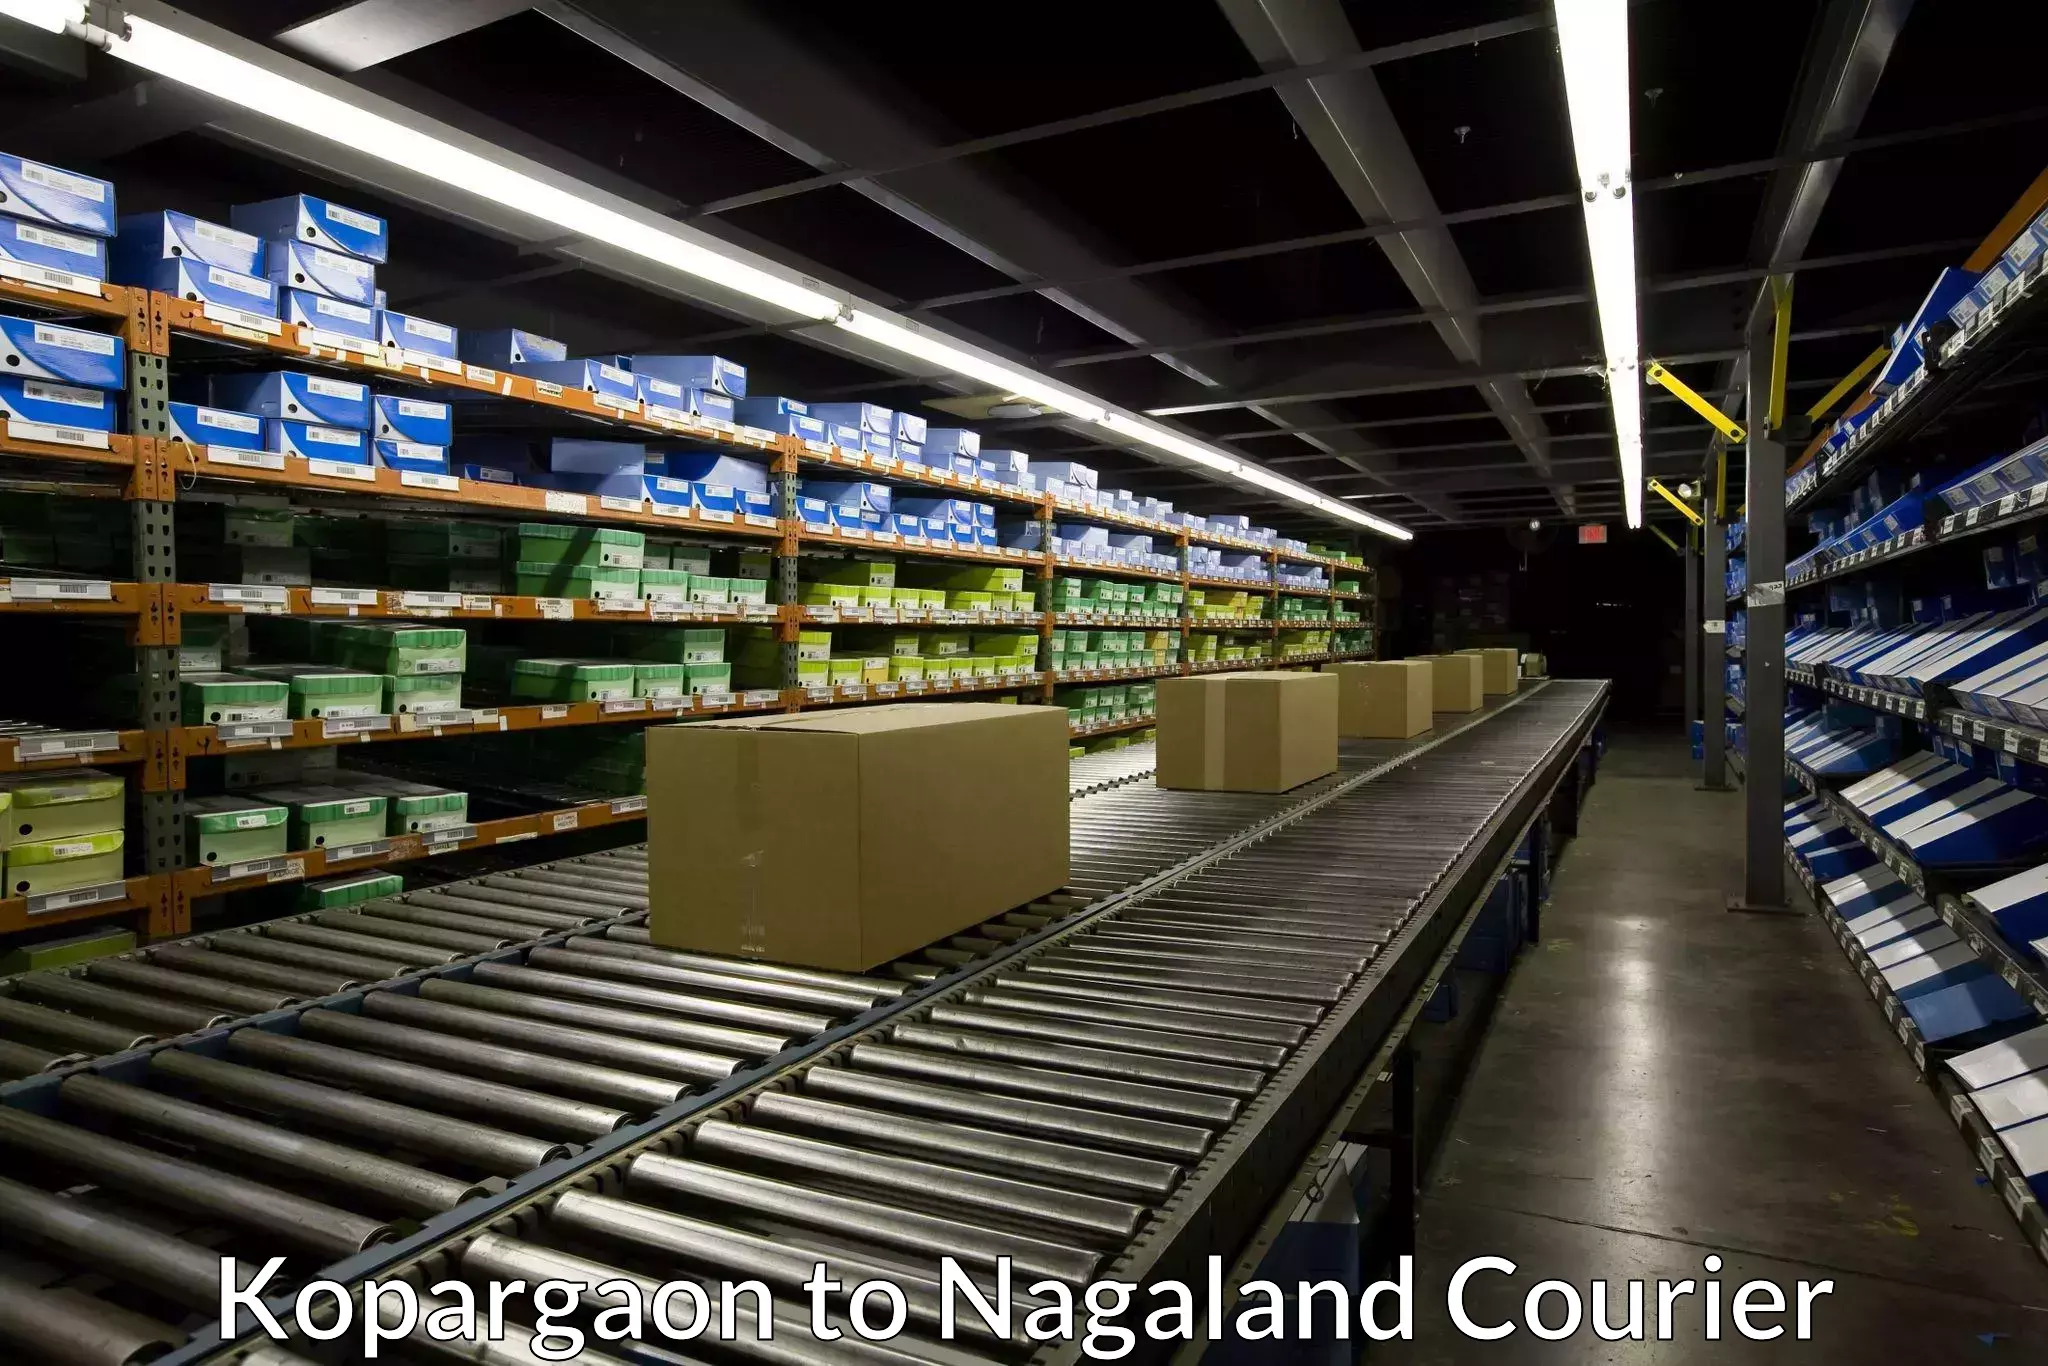 Express delivery capabilities Kopargaon to Nagaland